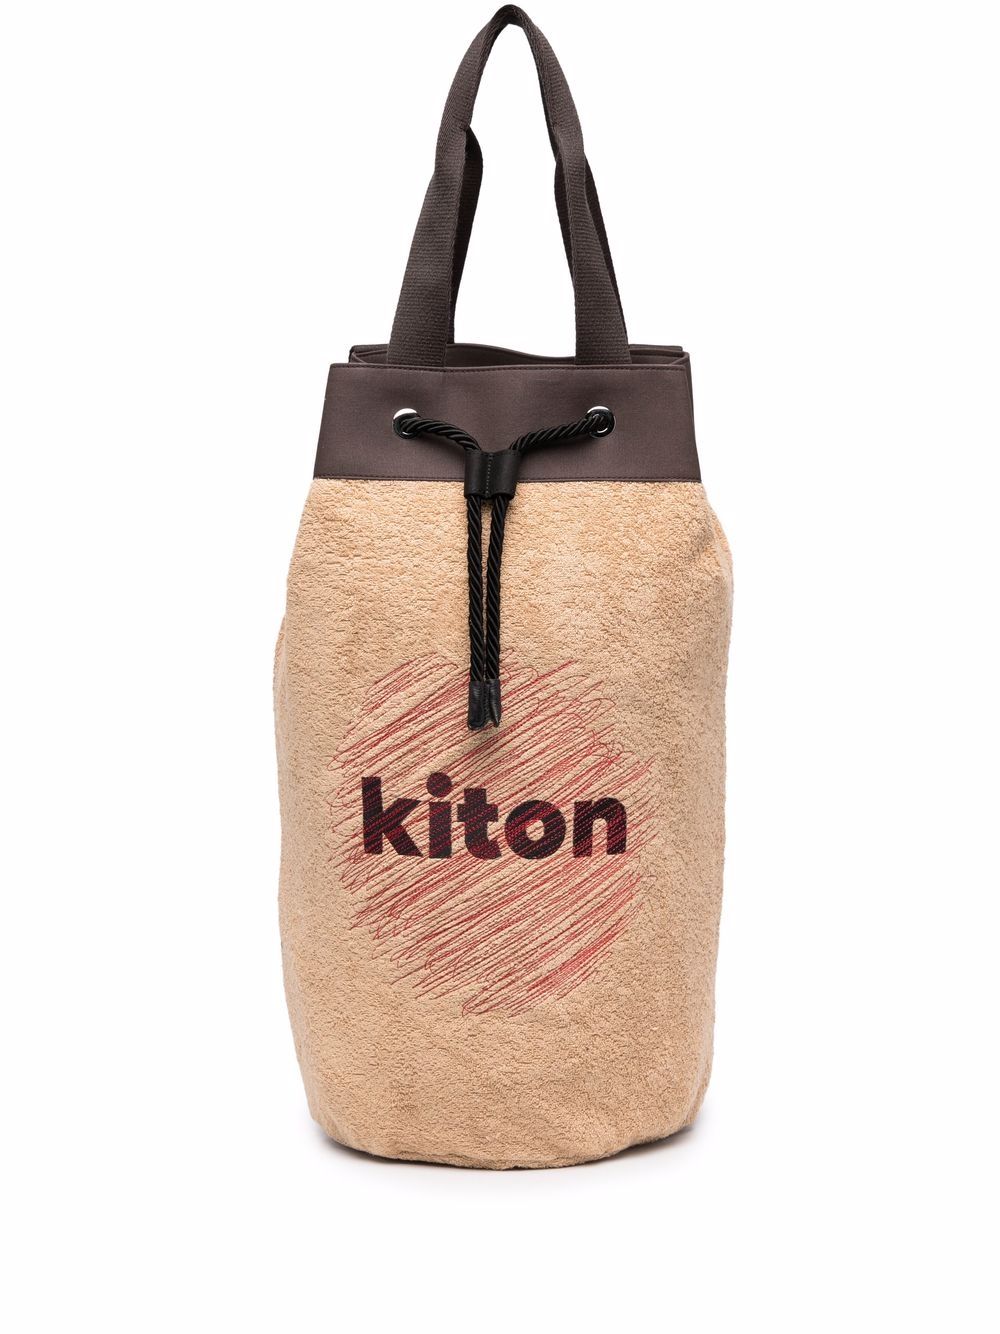 фото Kiton большая сумка-ведро с логотипом